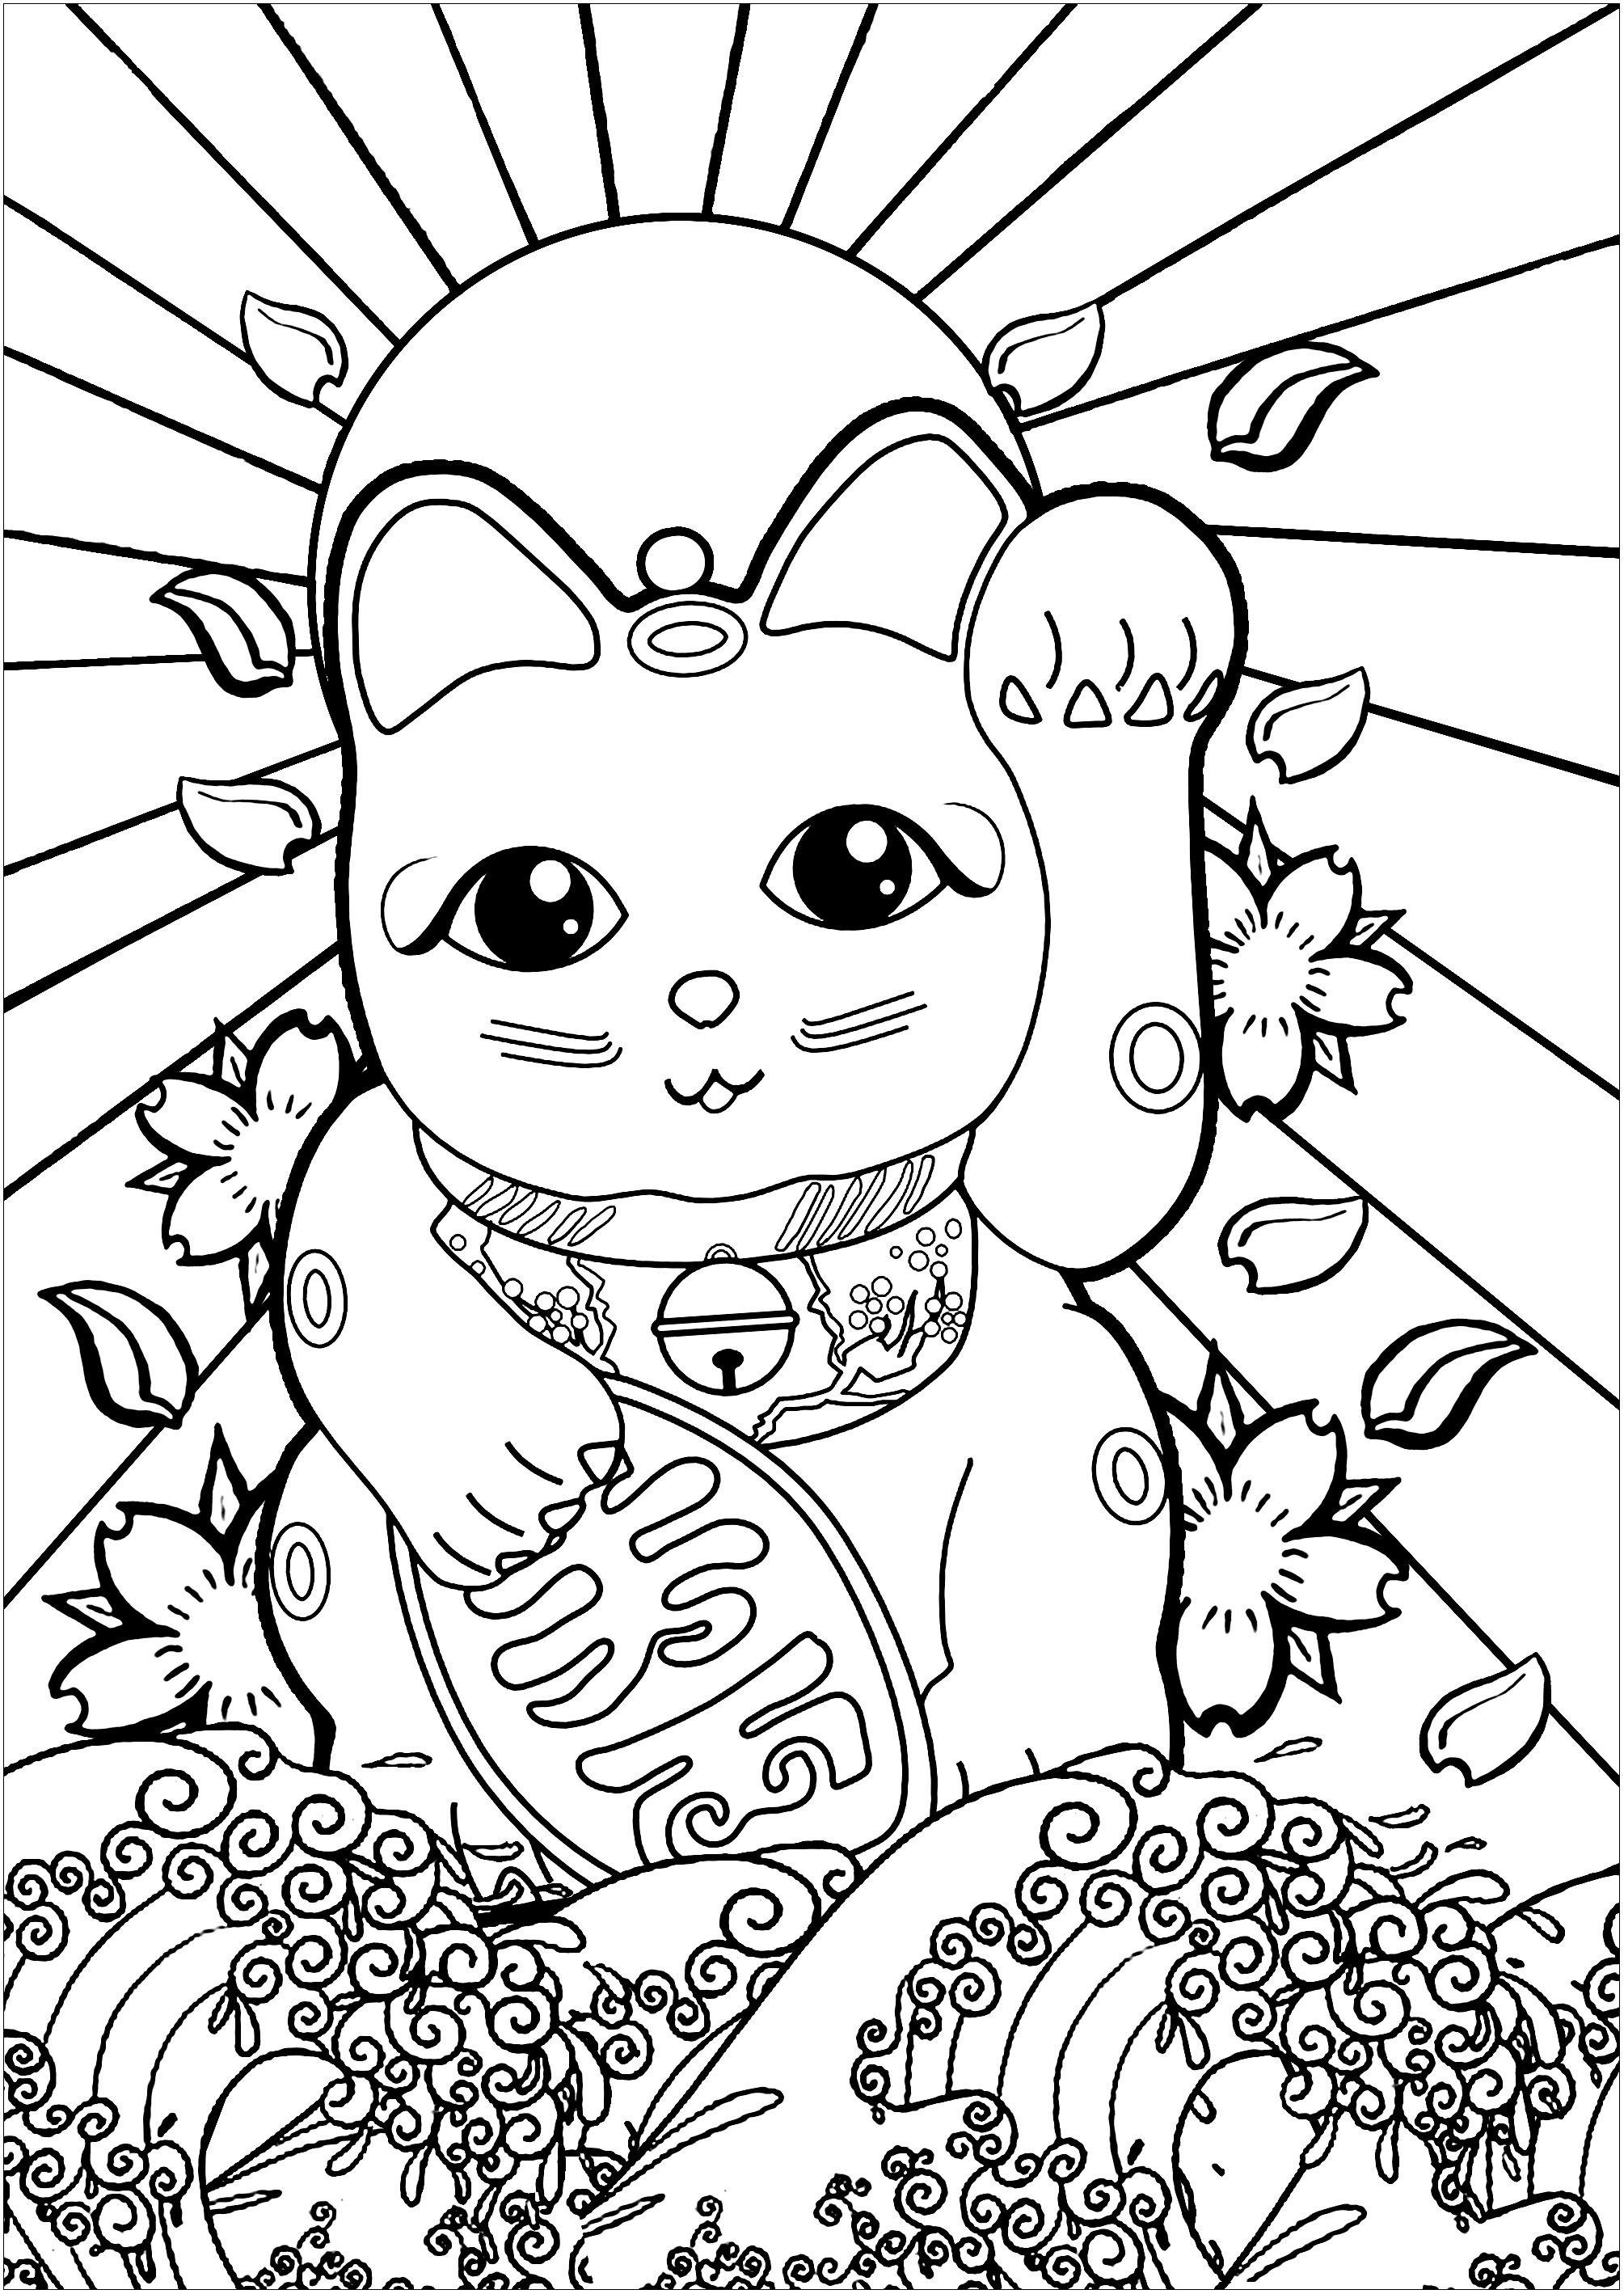 Cute Maneki Neko with other symbols of Japon : Rising Sun Flag, Artist : Art. Isabelle